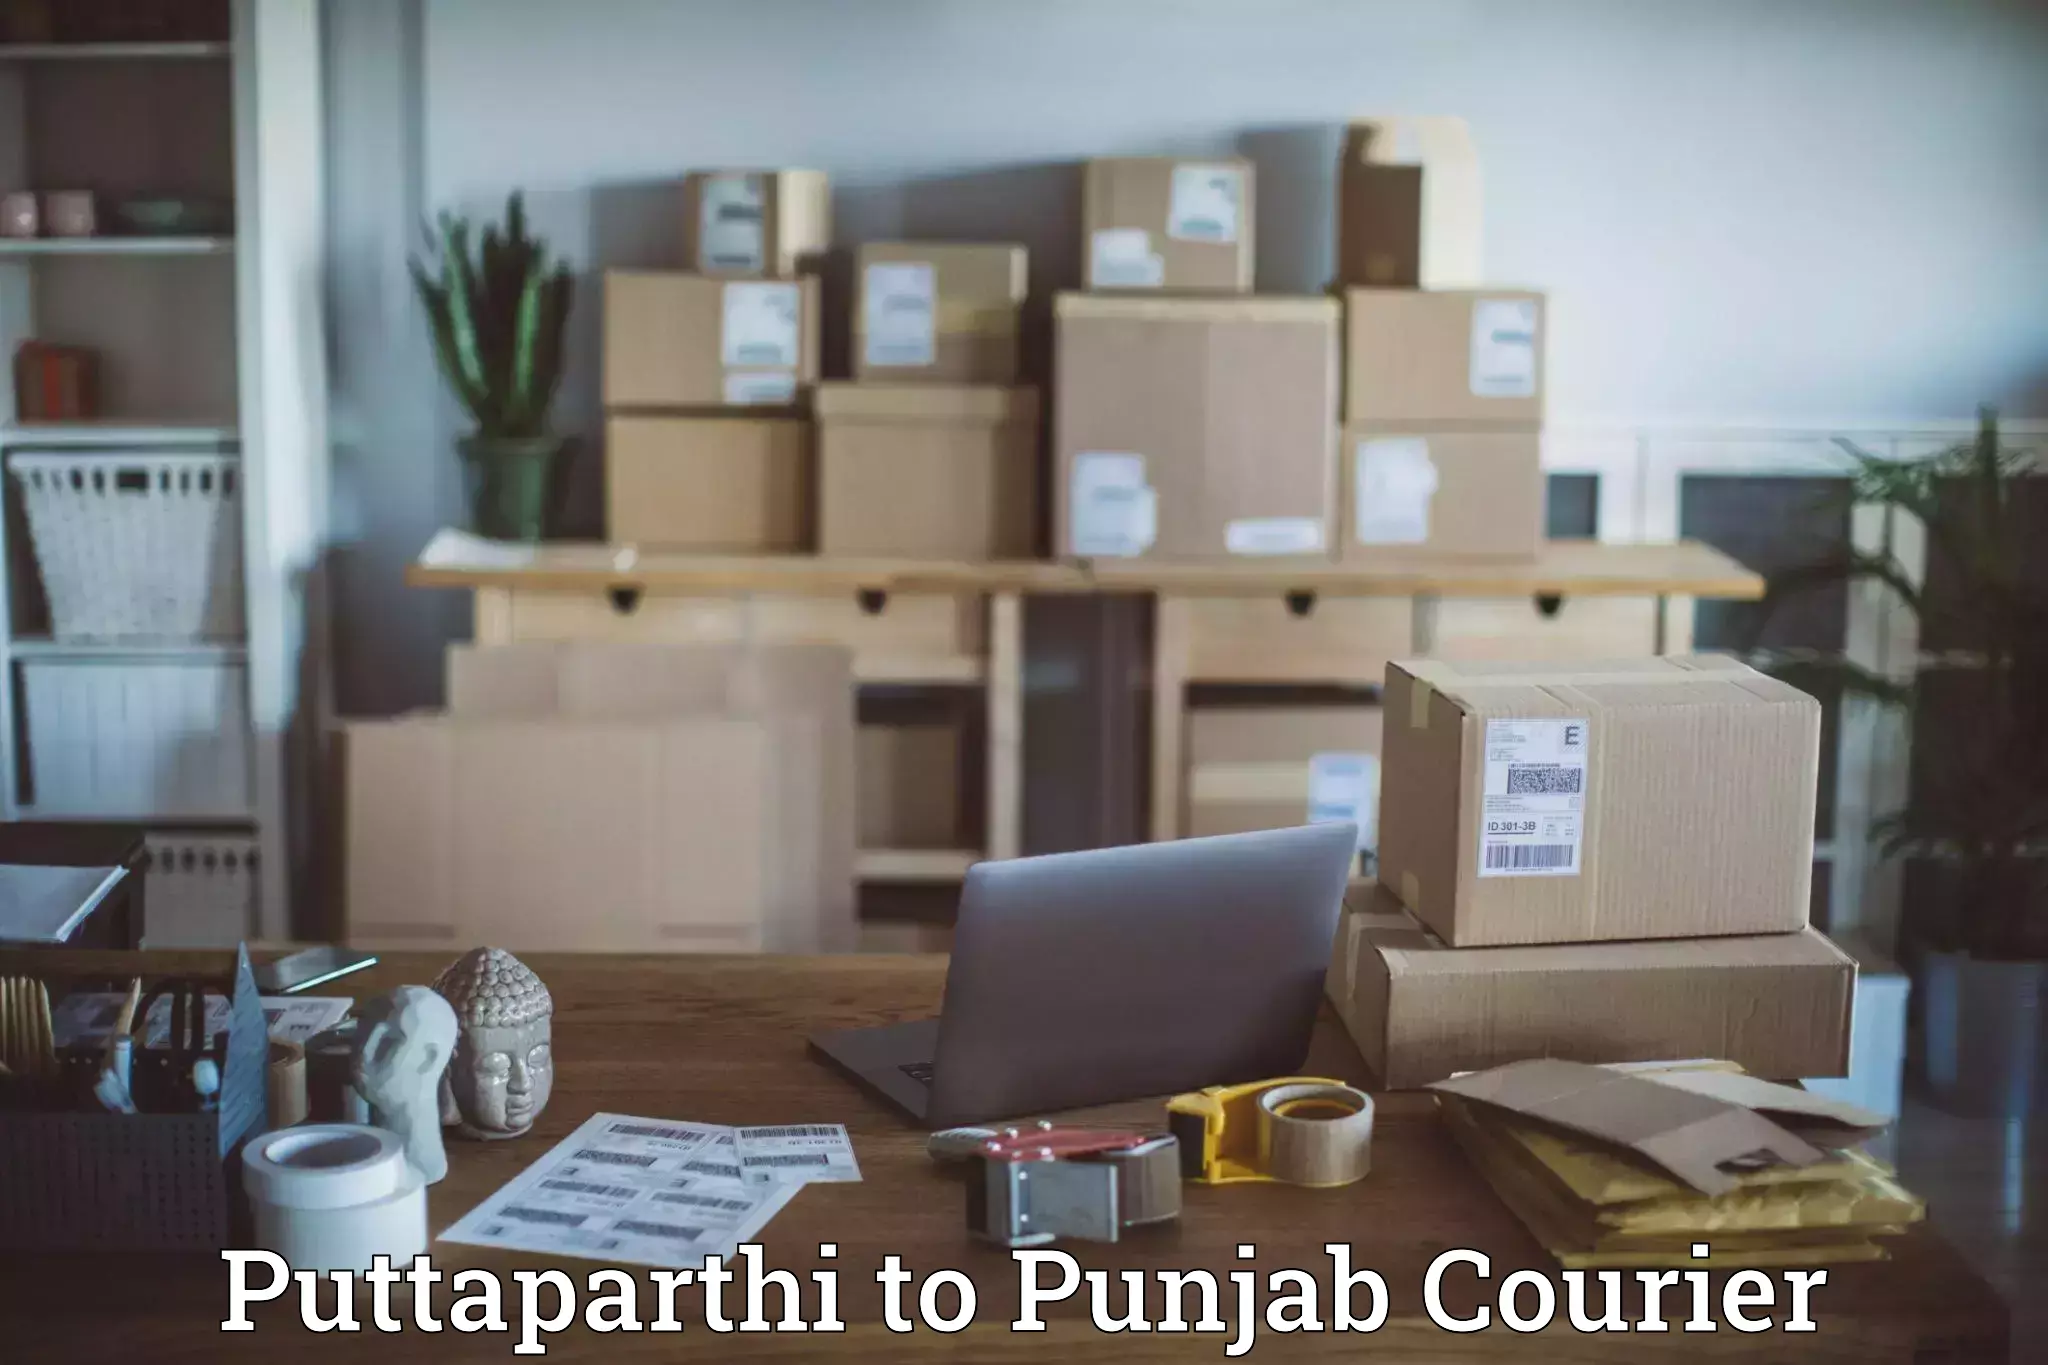 Courier service innovation Puttaparthi to Punjab